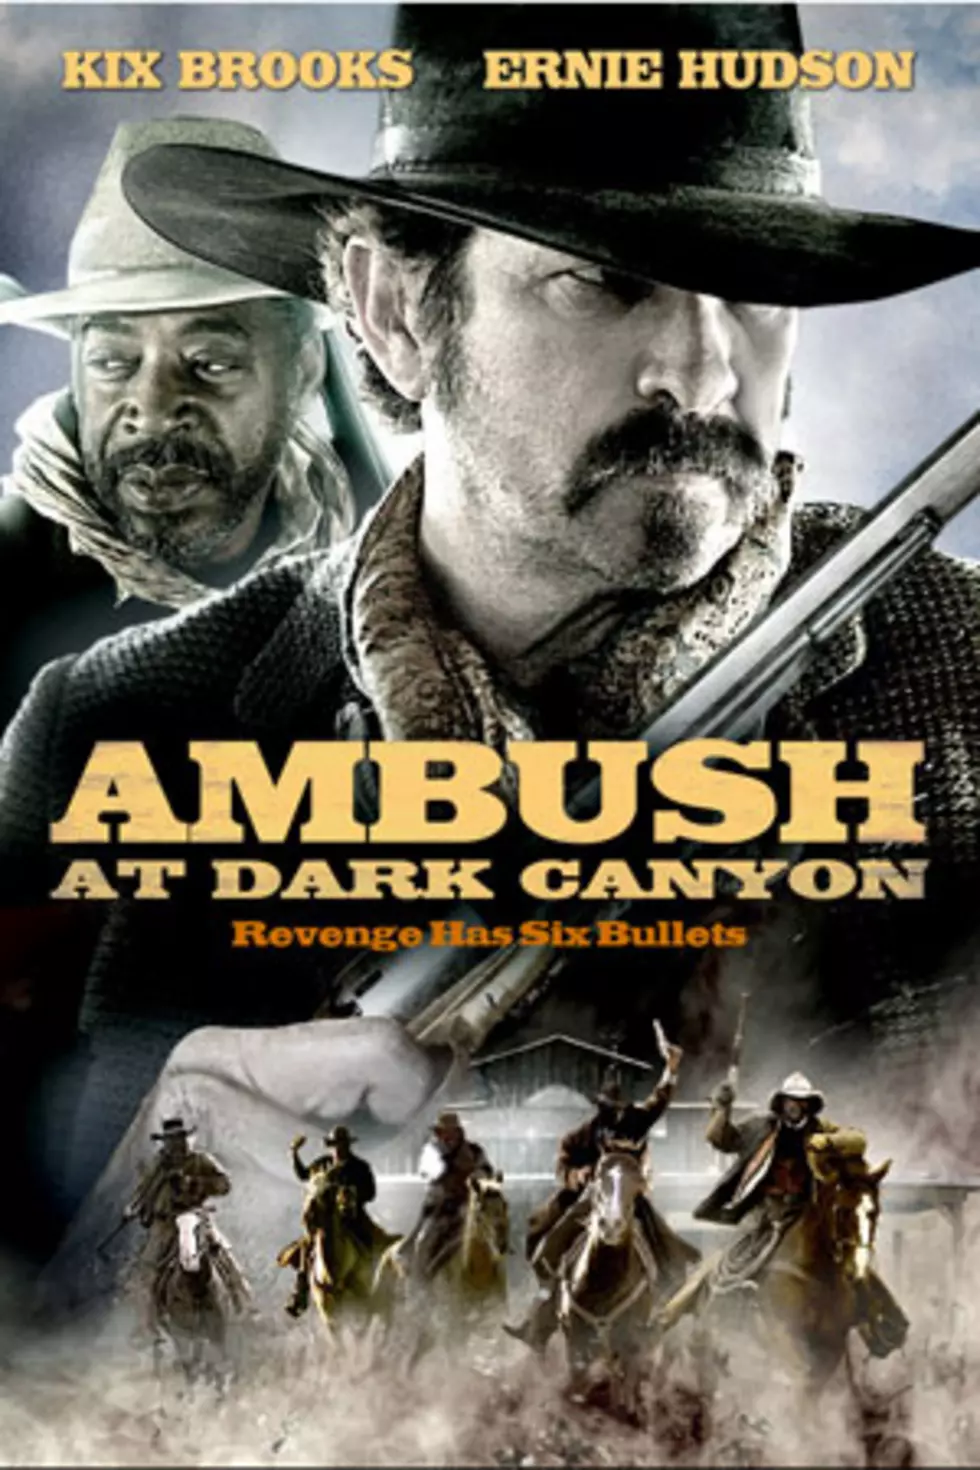 Win a Signed DVD Copy of Kix Brooks’ Movie ‘Ambush at Dark Canyon’